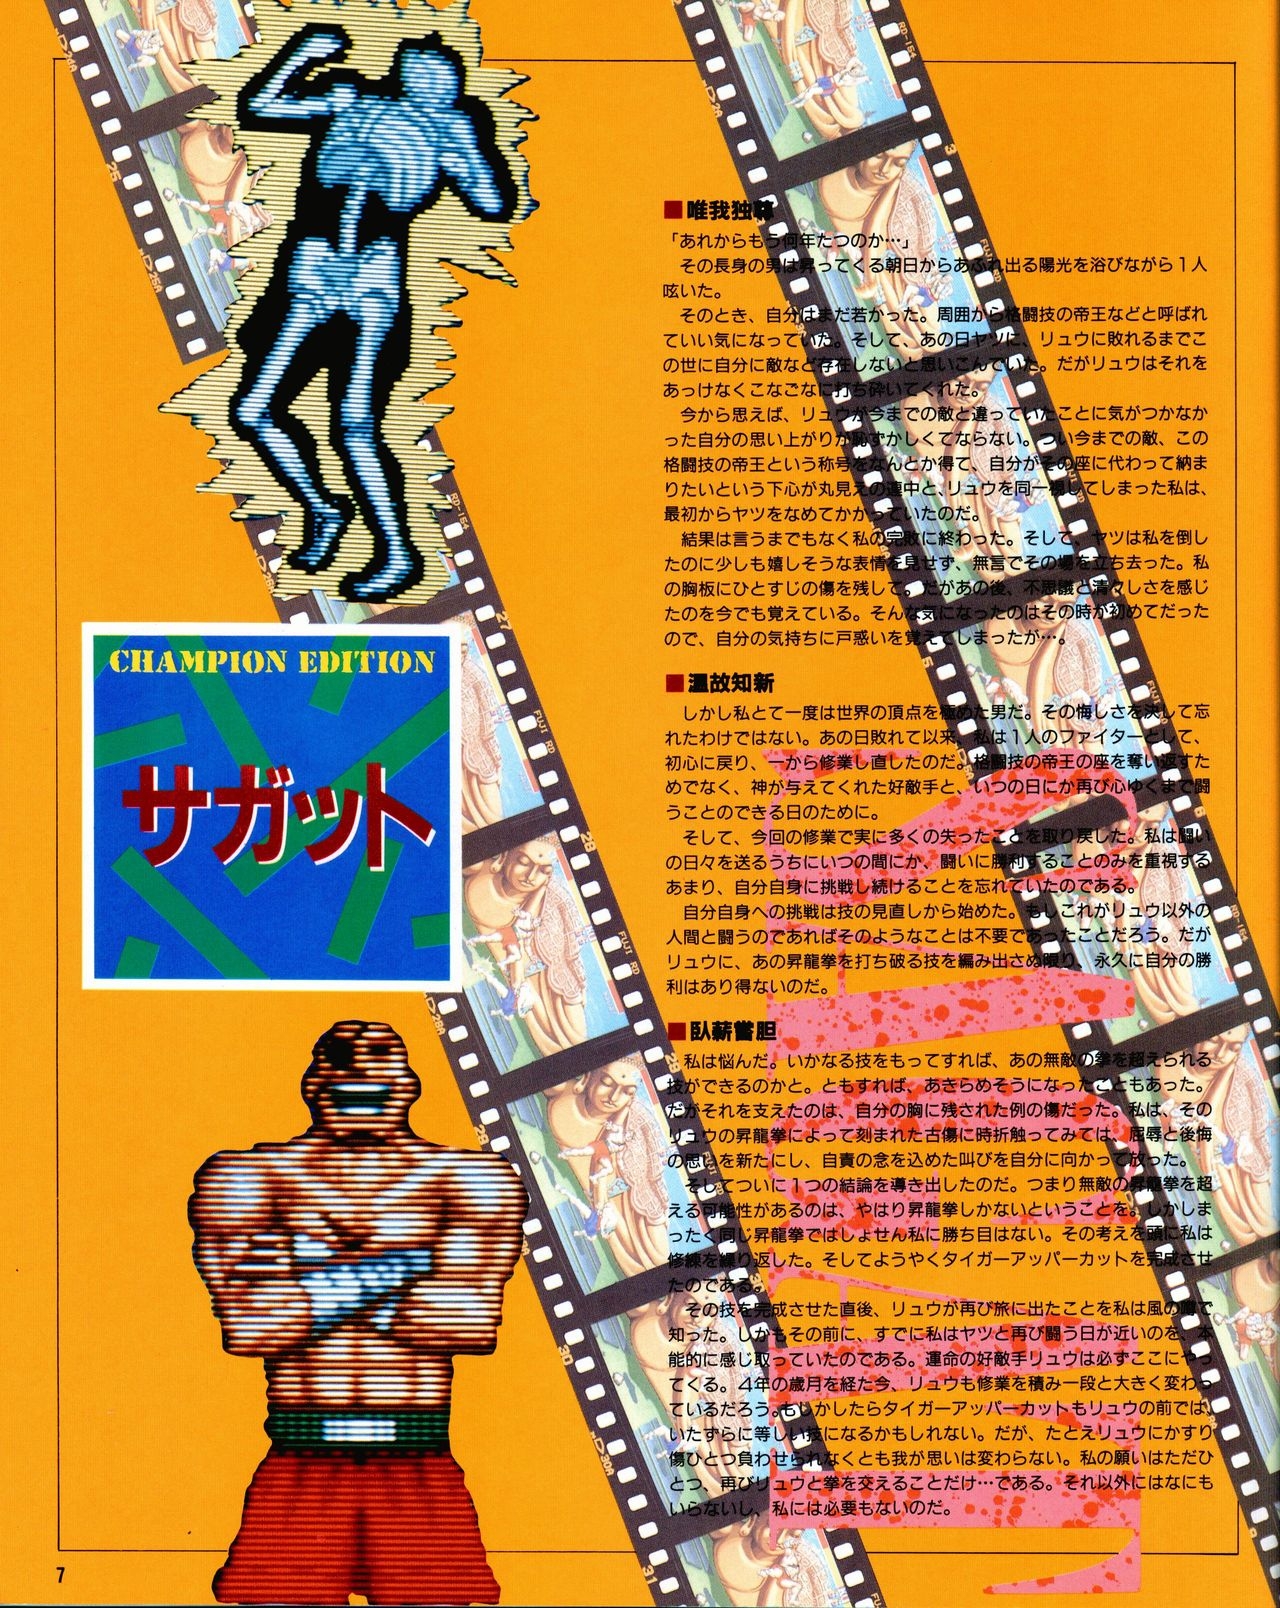 Street Fighter II Dash - Gamest special issue 77 8